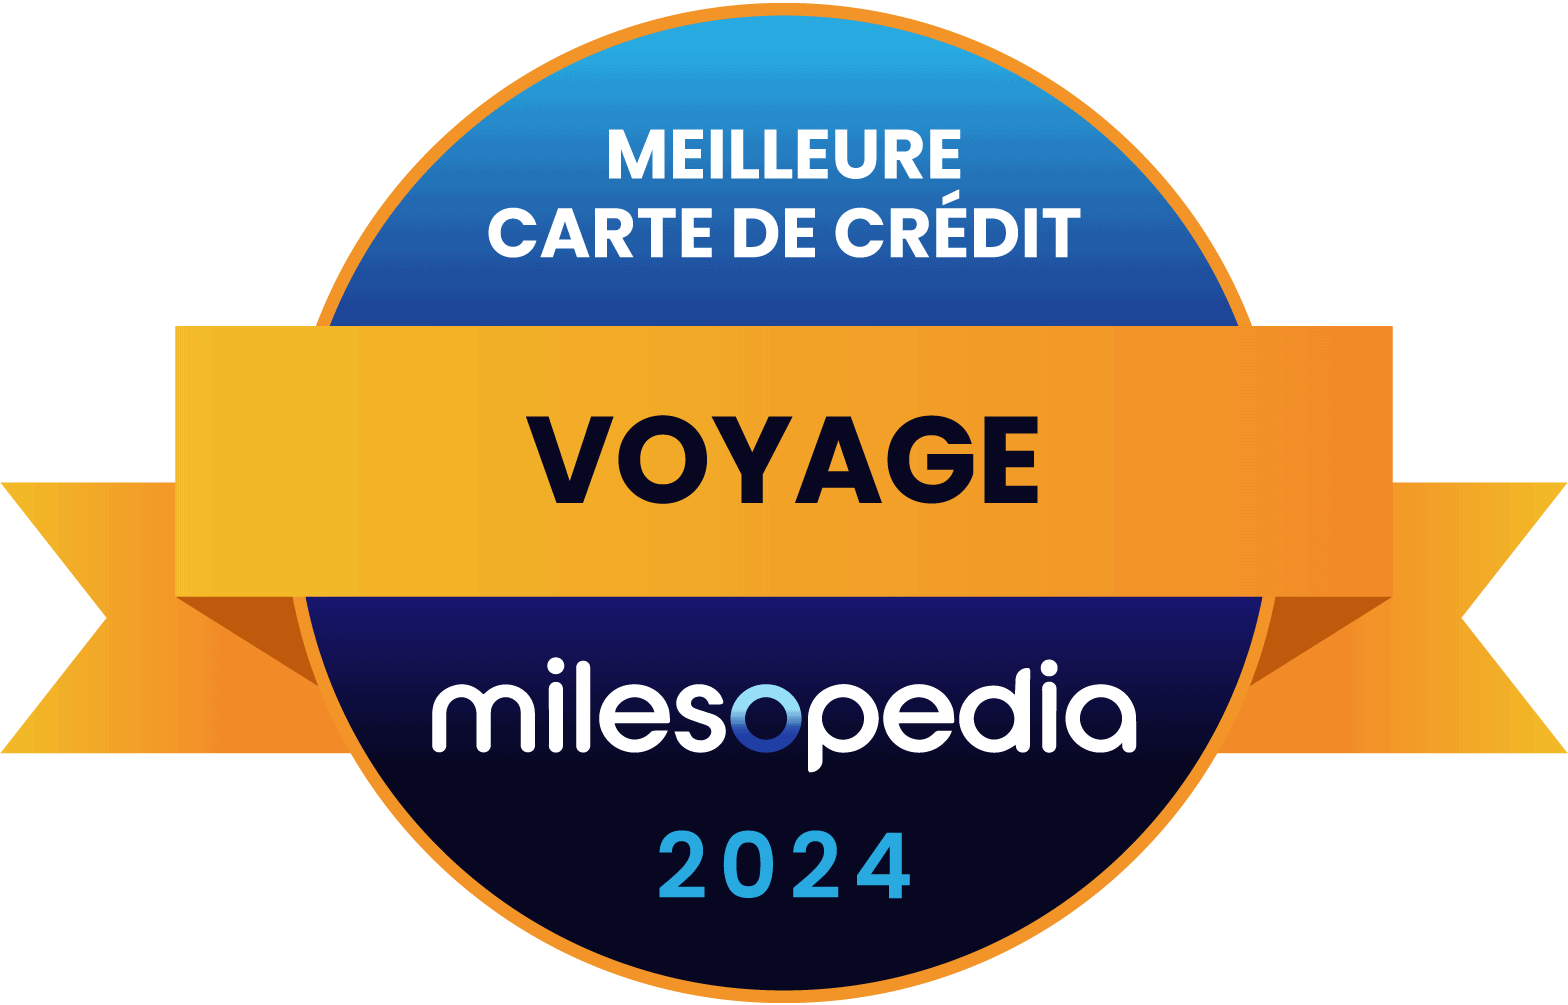 Voyage MeilleureCarteDeCredit Milesopedia 2024